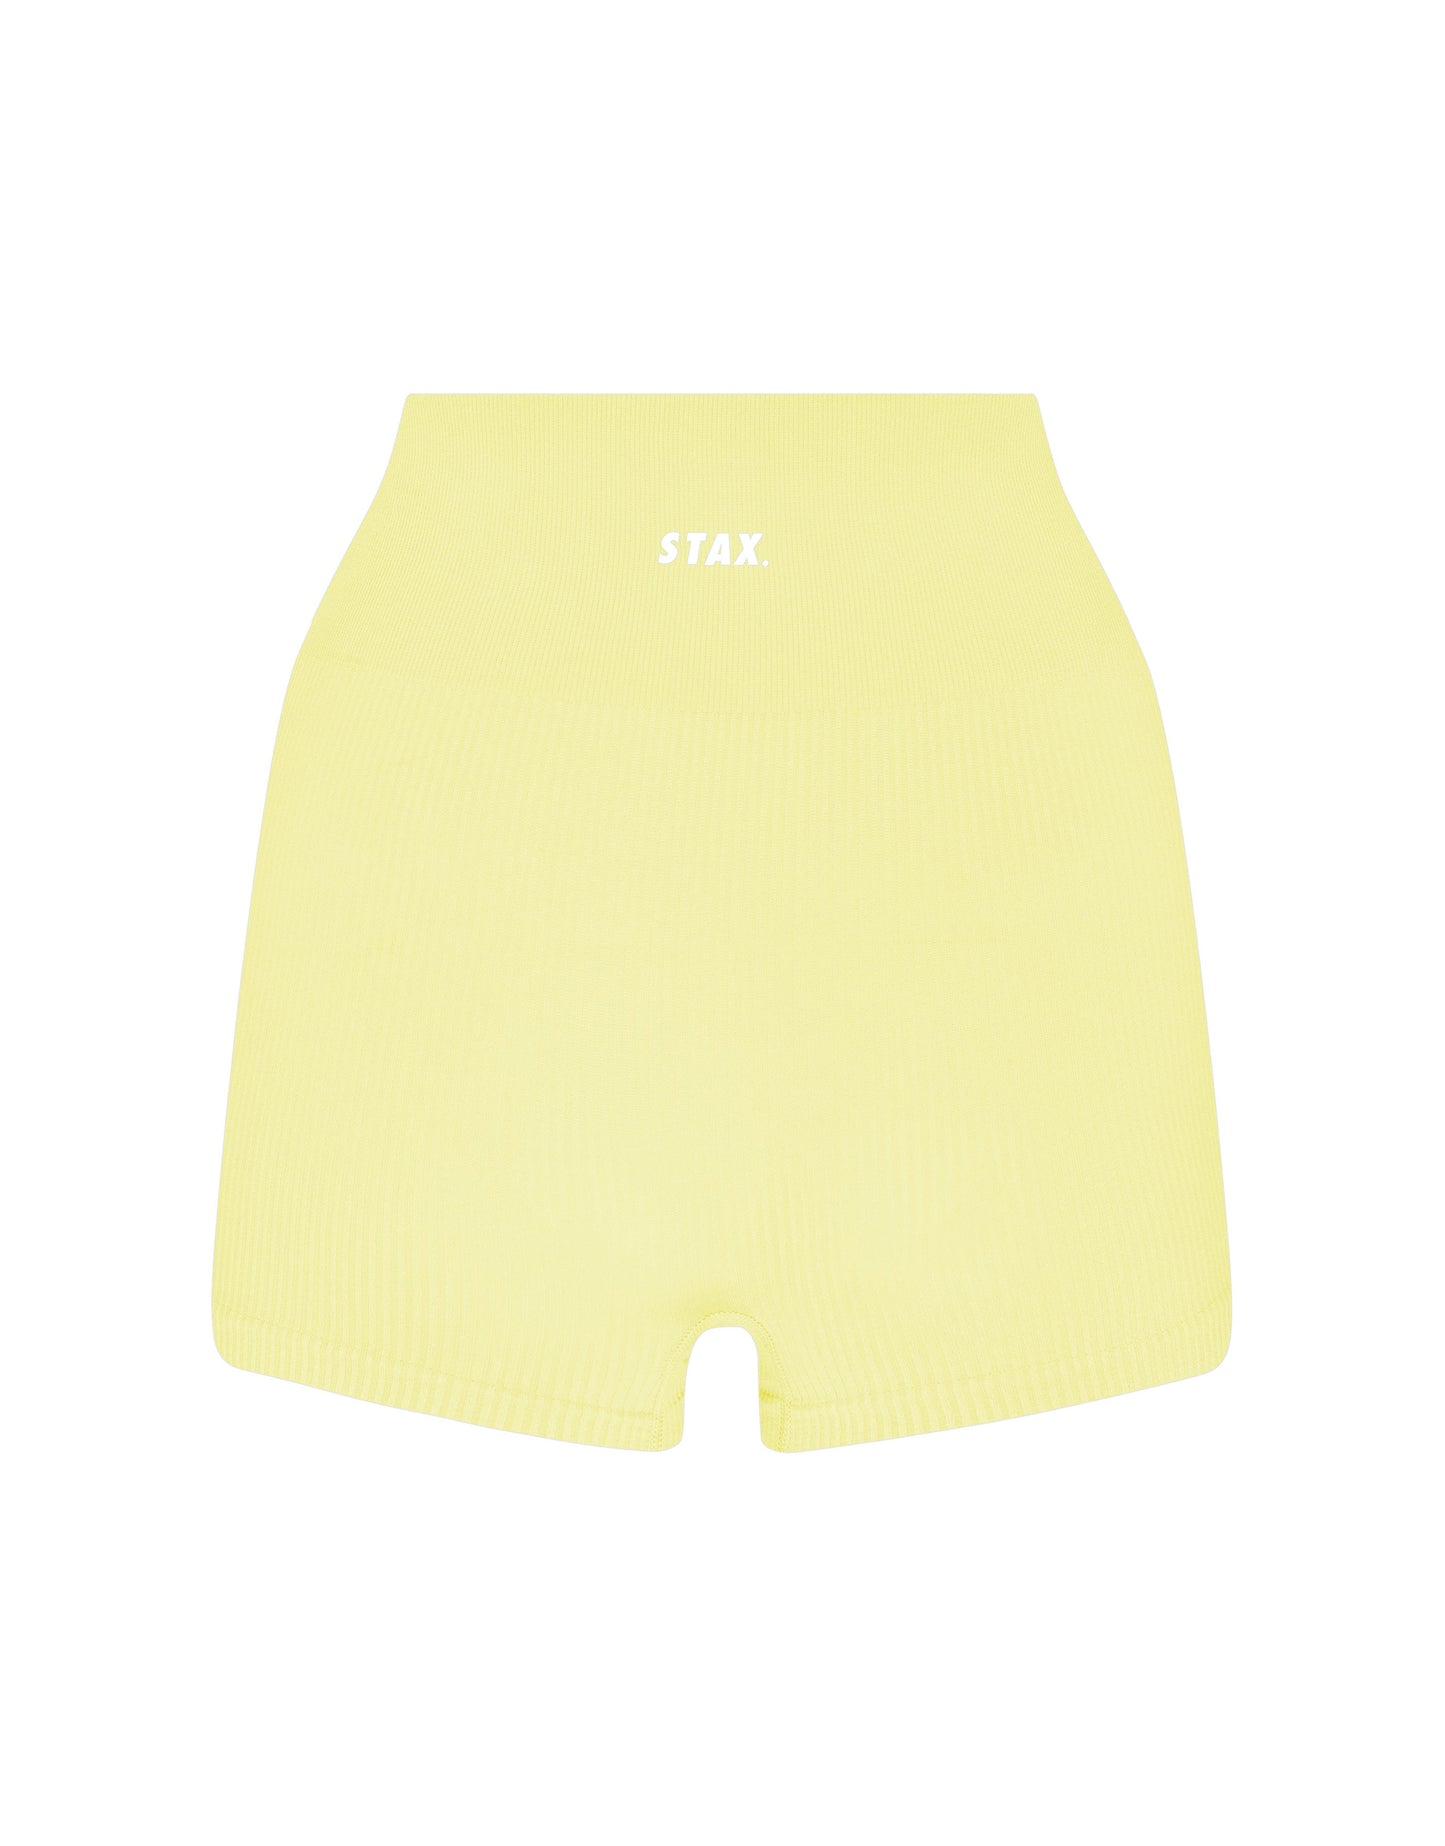 STAX. Premium Seamless V5.1 (Favourites) Mini Lounge Shorts - Lemon (Yellow)